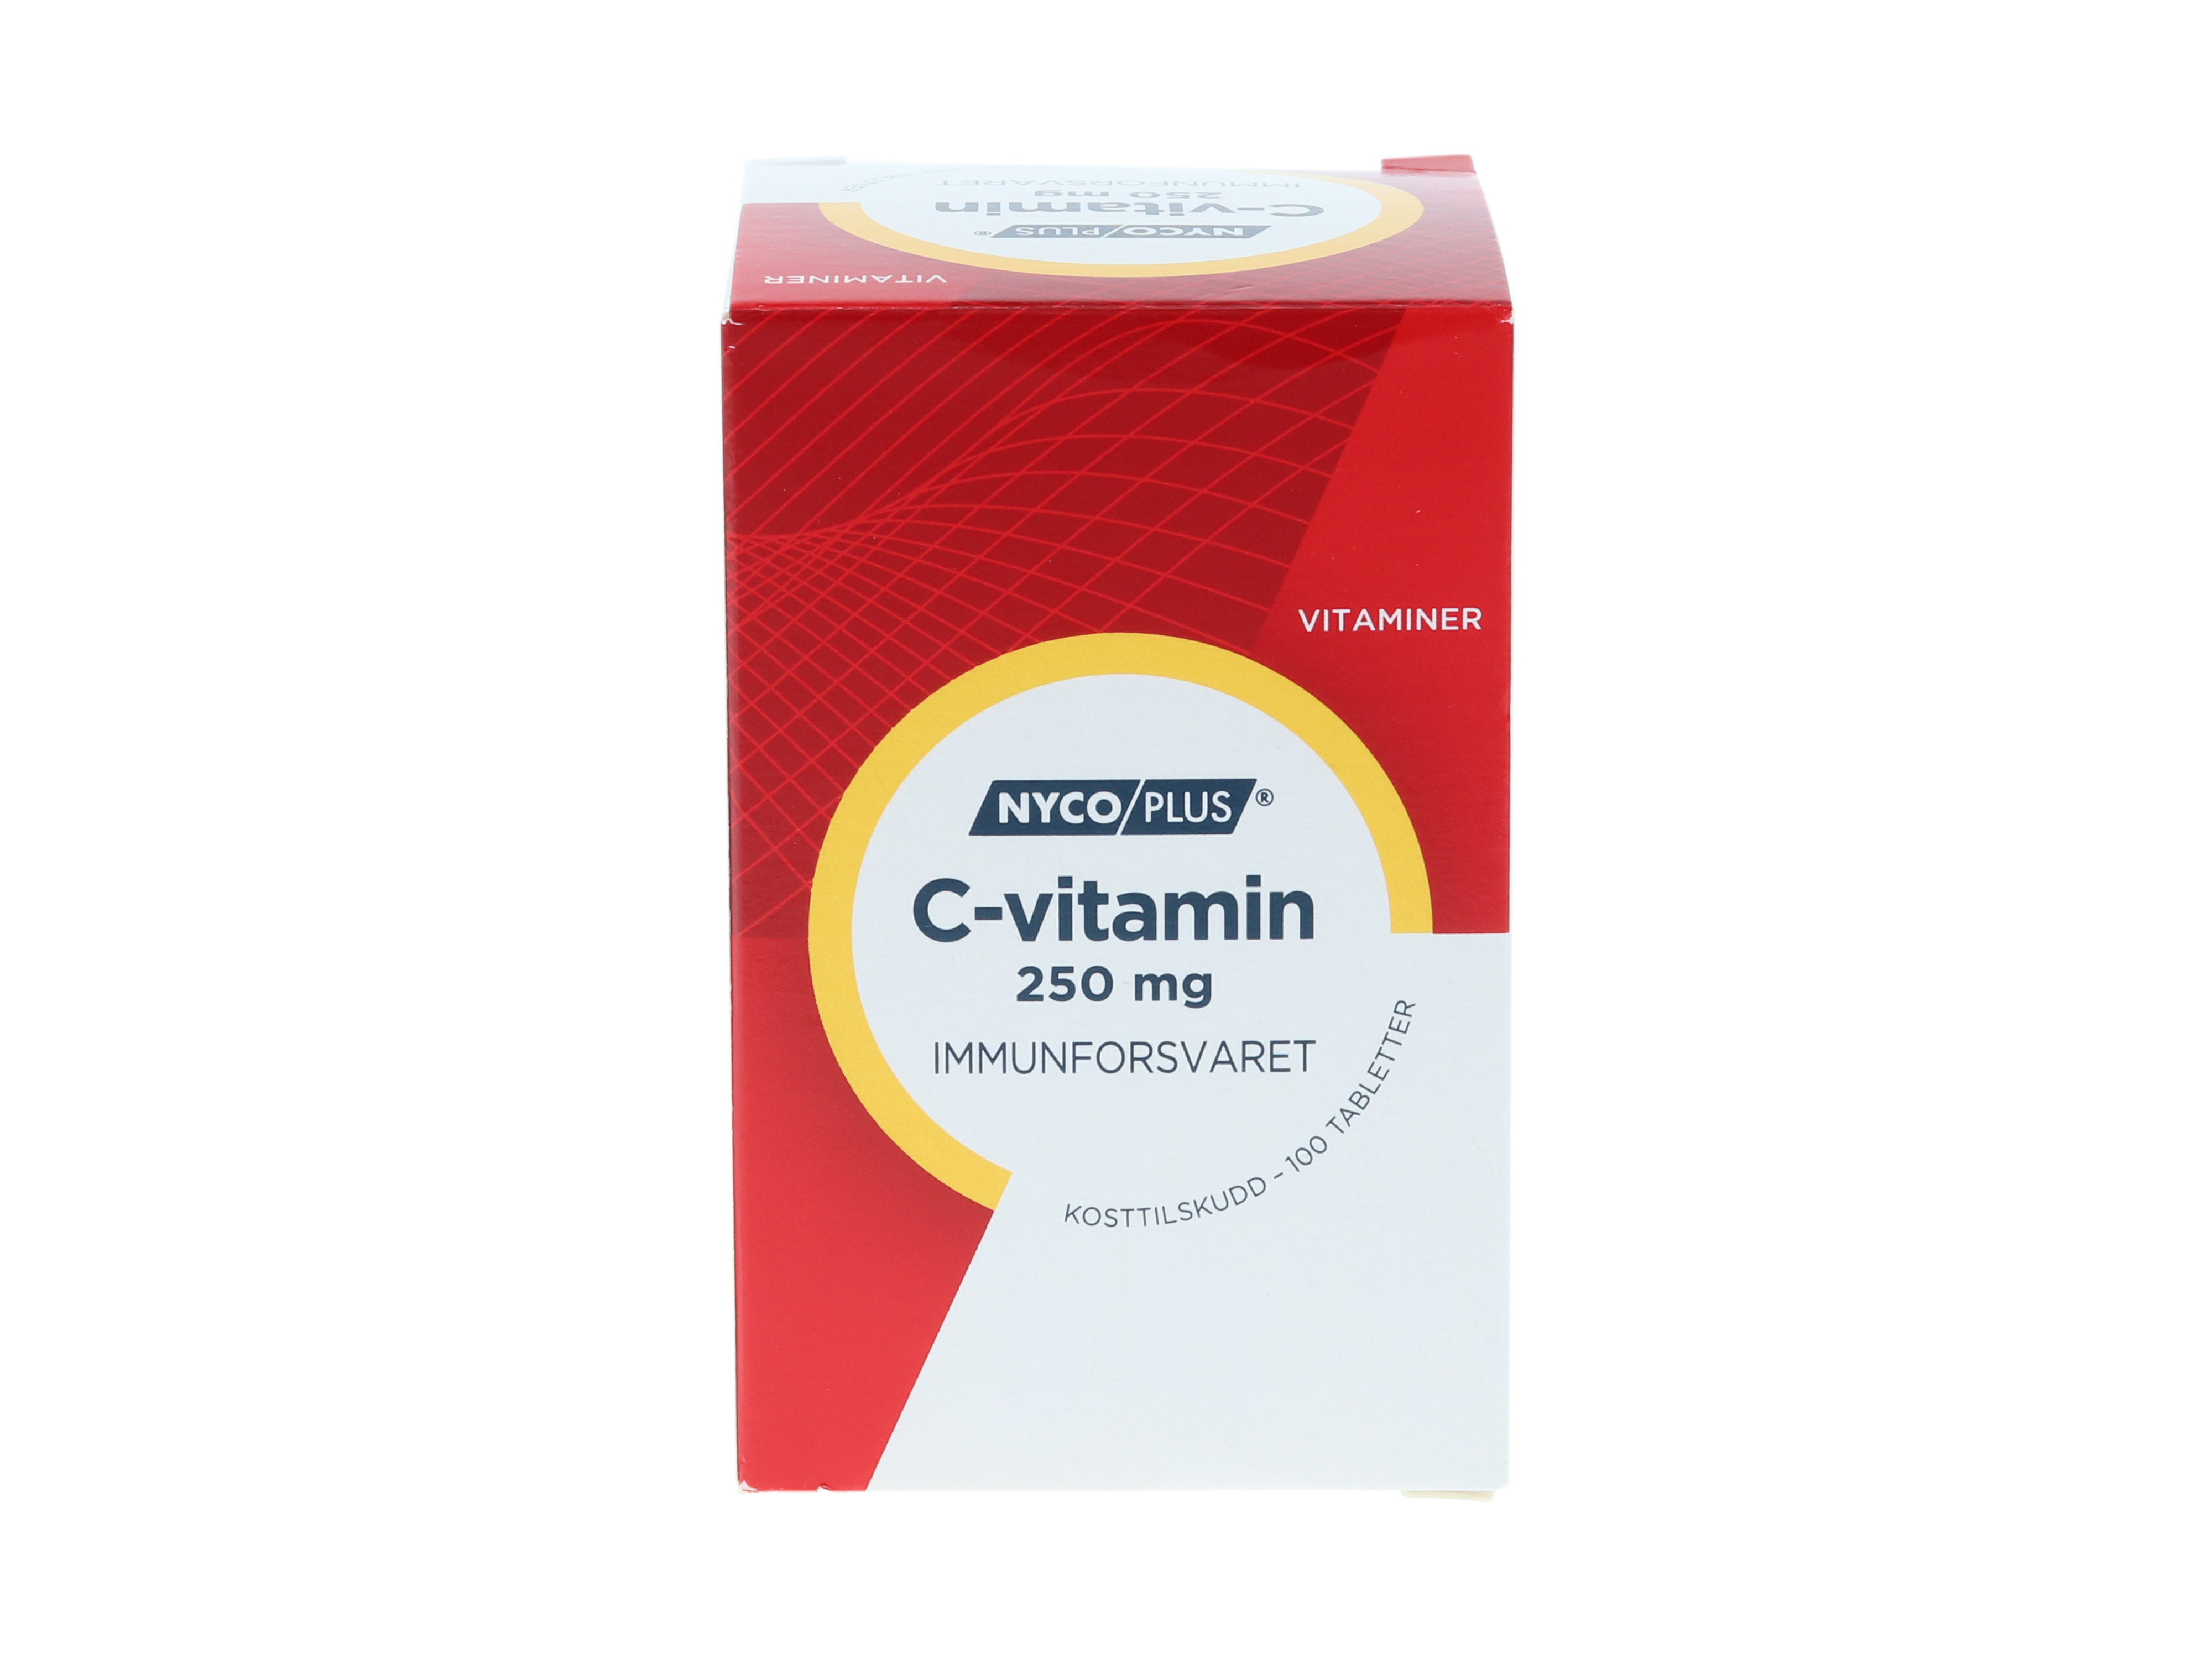 Nycoplus C-vitamin tab 250 mg, 100 tabletter